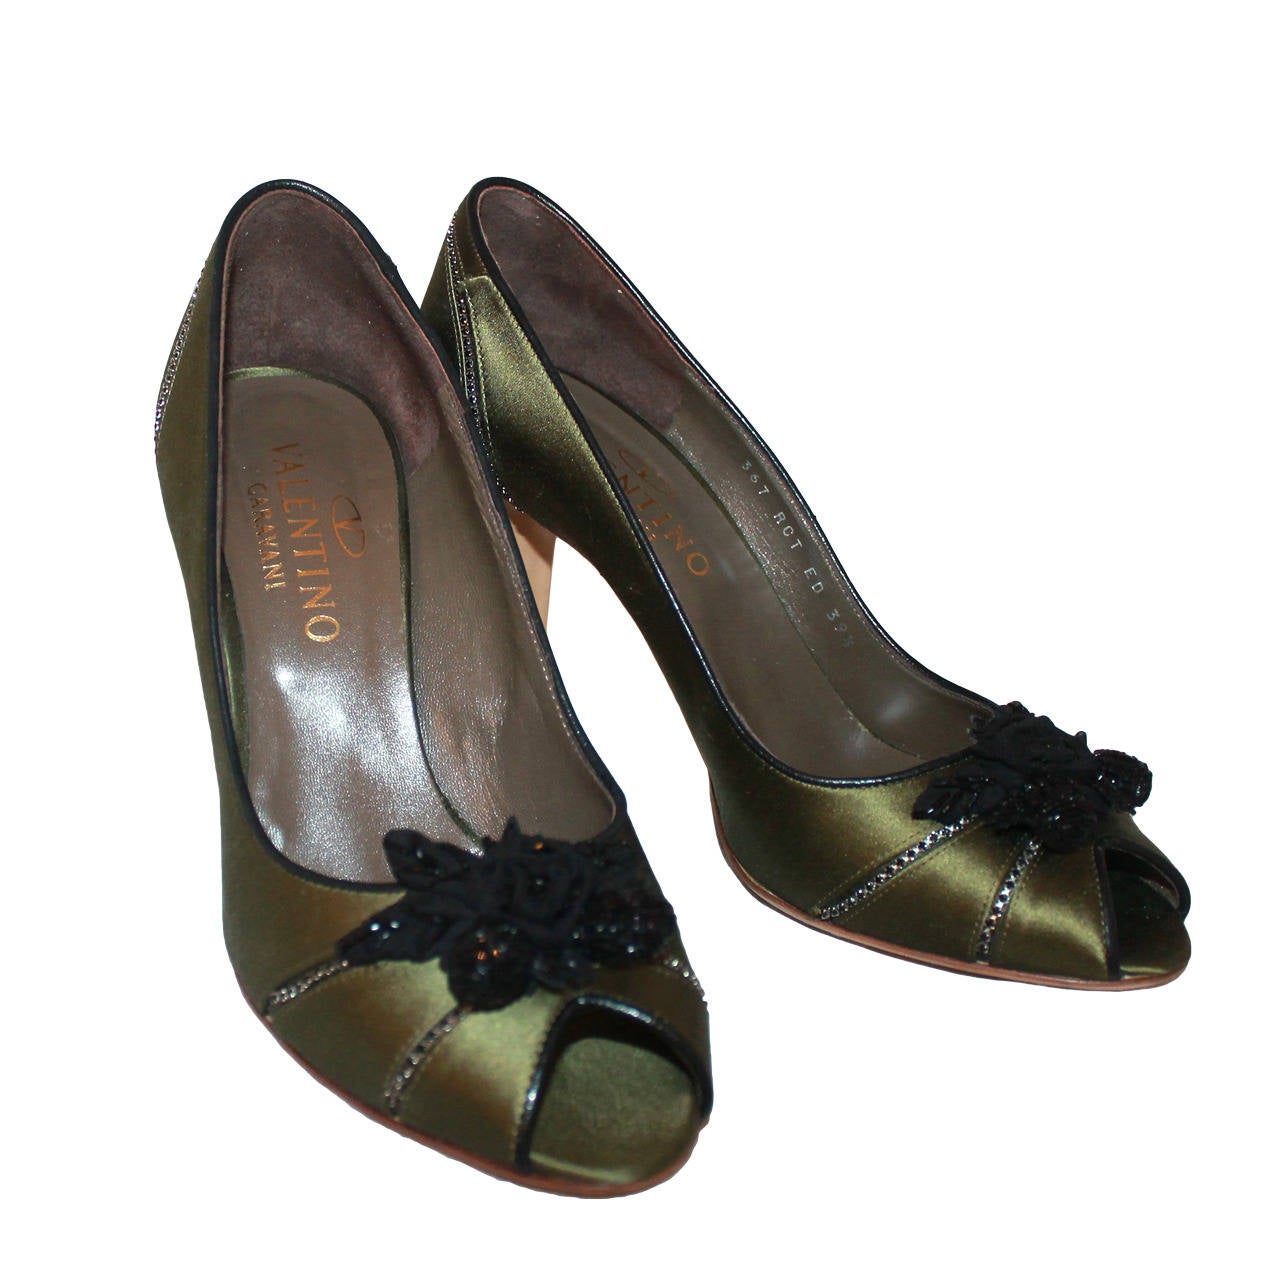 Betsey Johnson 10 M black satin stiletto sandals. rhinestone heels, “Bells”  New | eBay